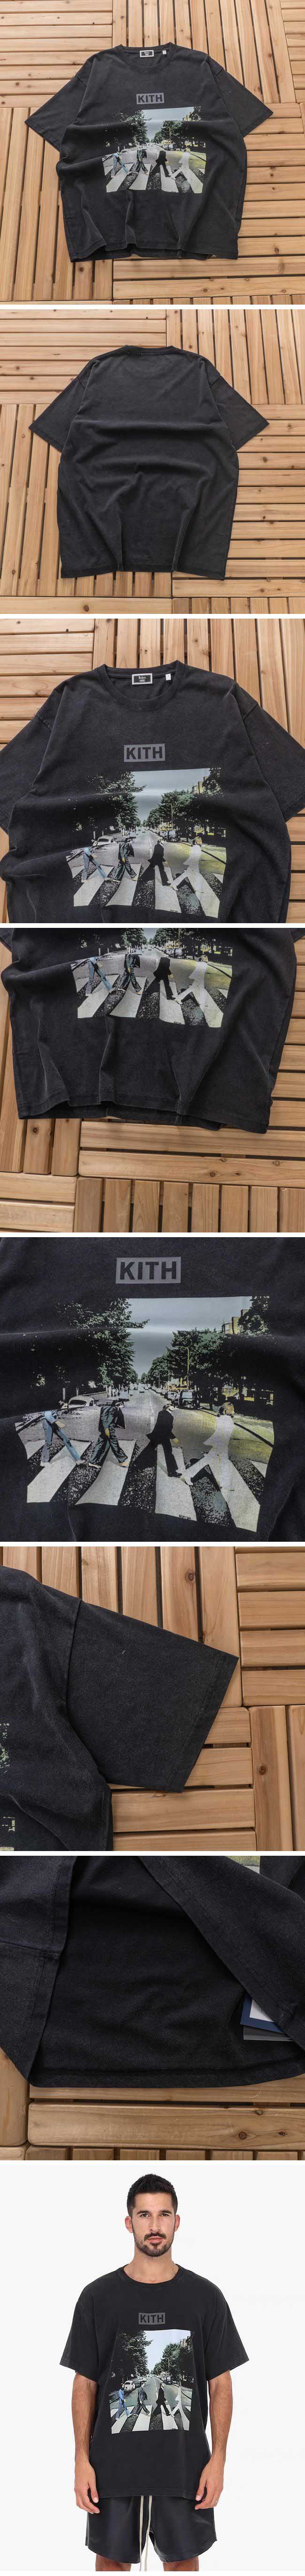 KITH x The Beatles Abbey Road Vintage Tee キス x ビートルズ アビー ロード ヴィンテージ Tシャツ